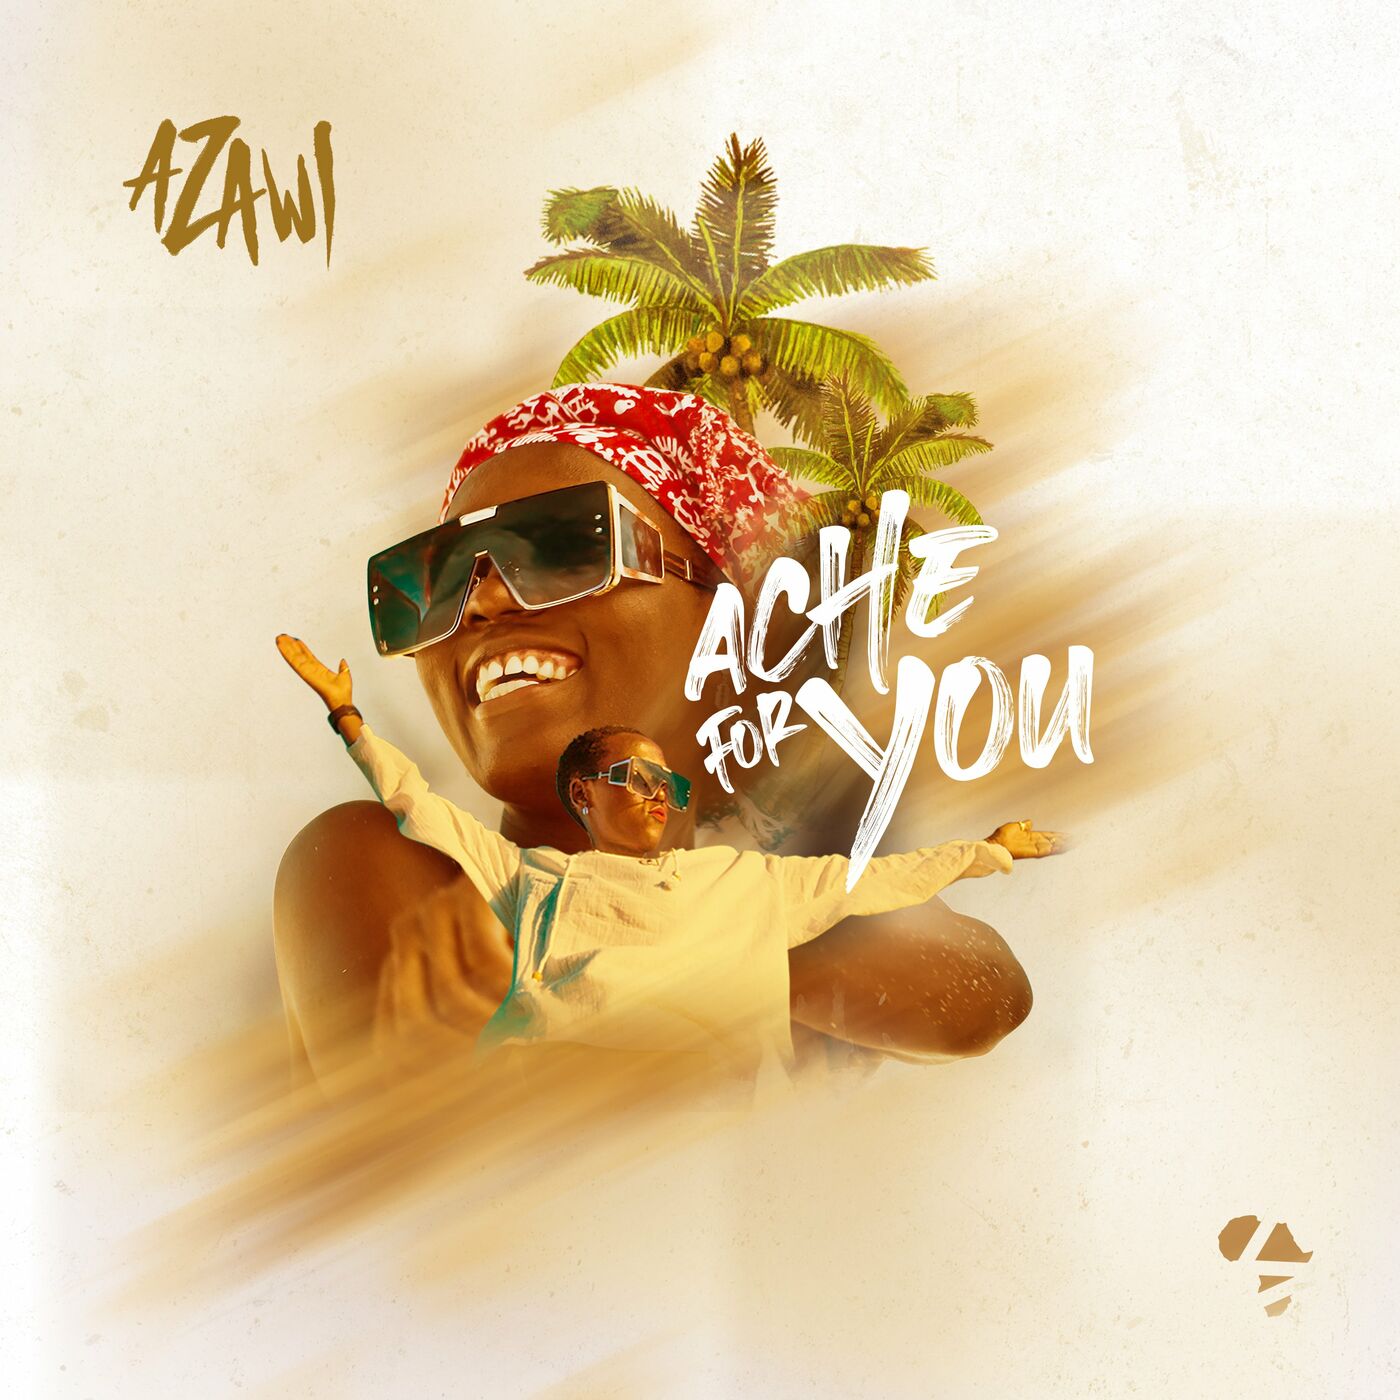 azawi-ache-for-you-album-cover